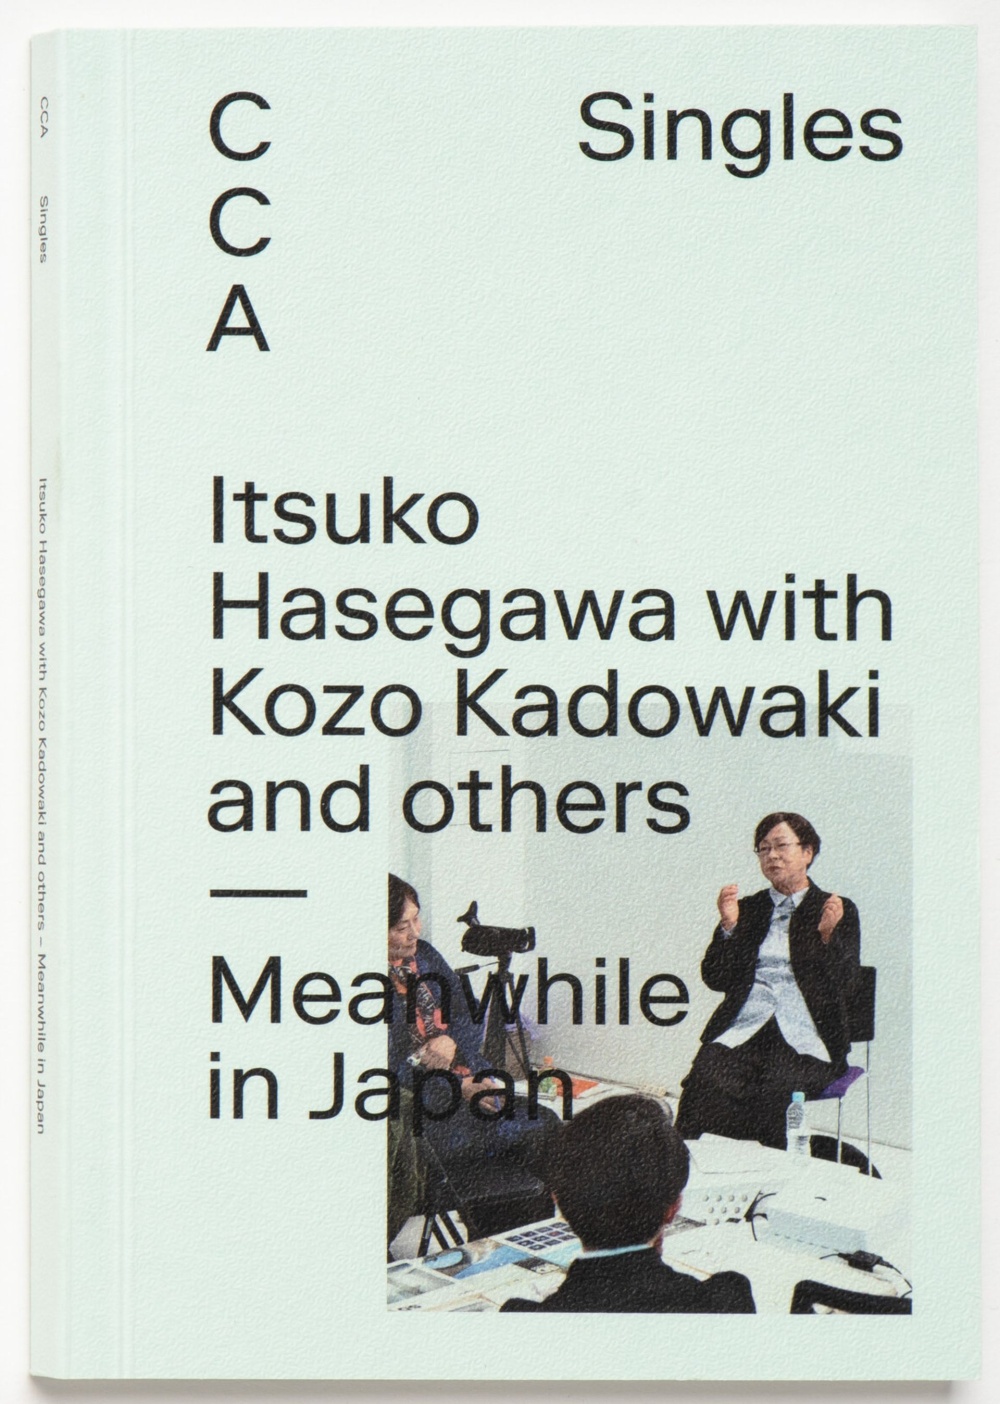 Itsuko Hasegawa with Kozo Kadowaki and others - Meanwhile in Jap